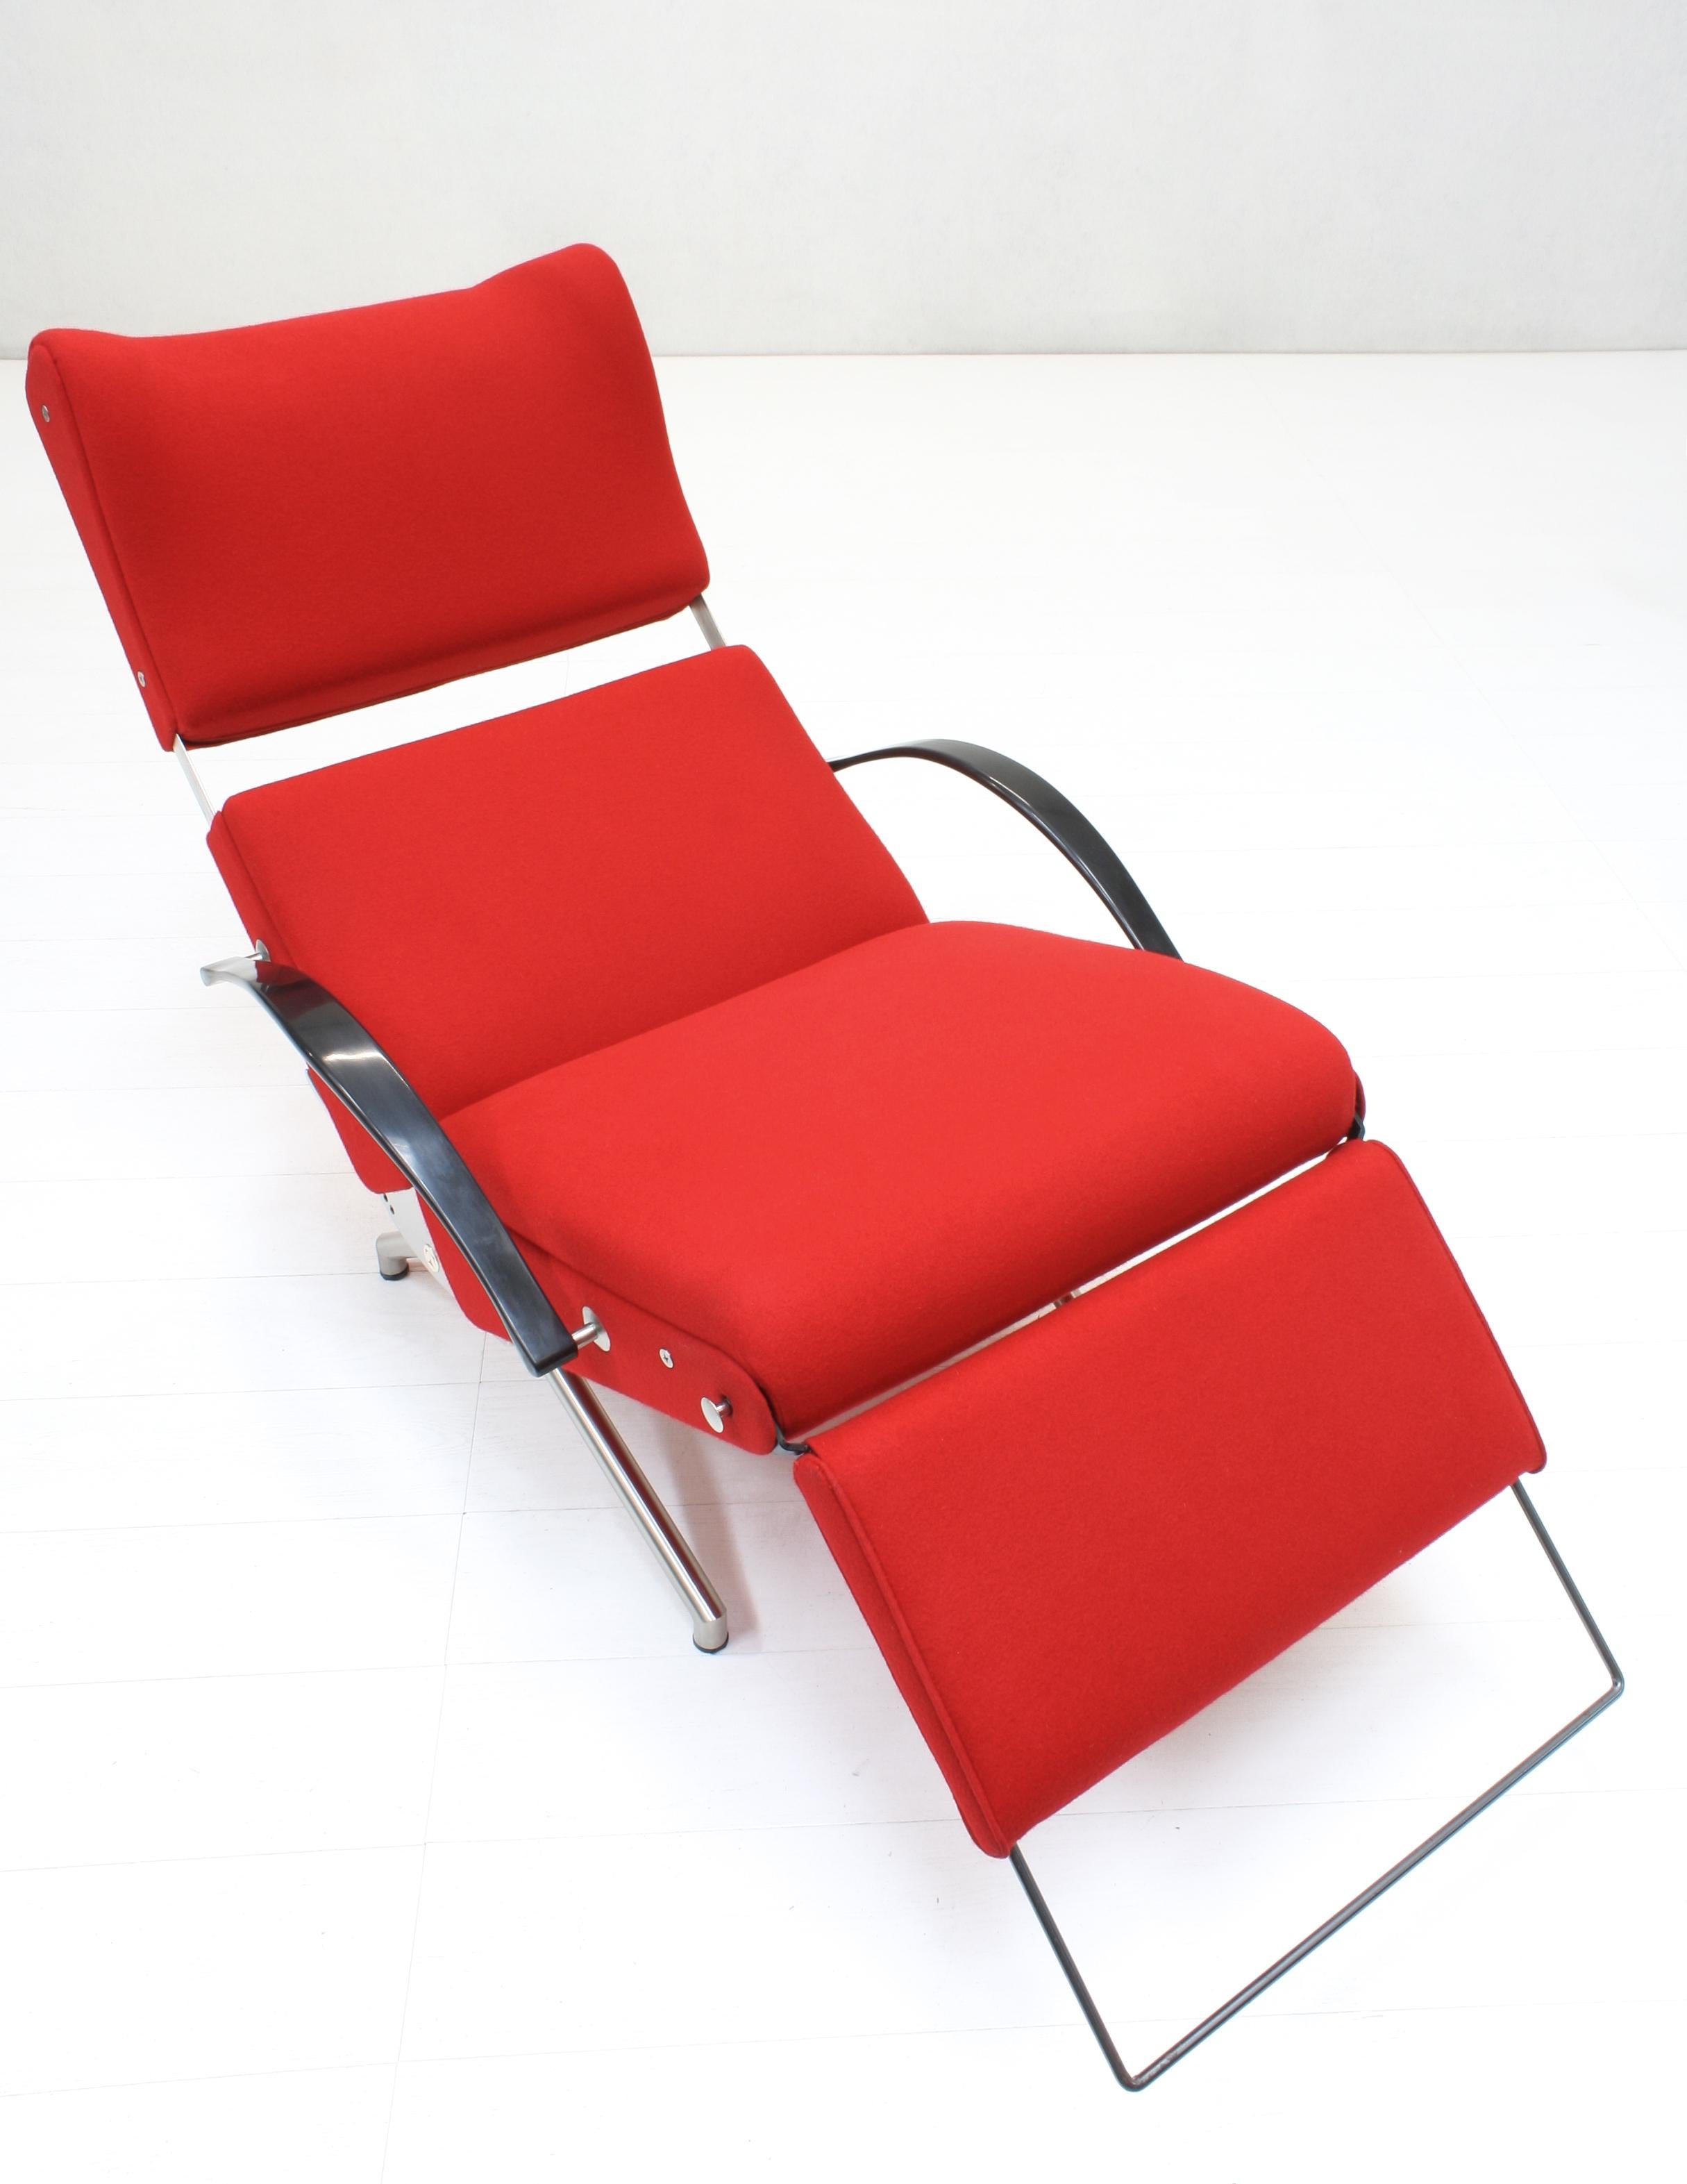 Adjustable P40 Lounge Chair by Osvaldo Borsani for Tecno spa, Italy 1